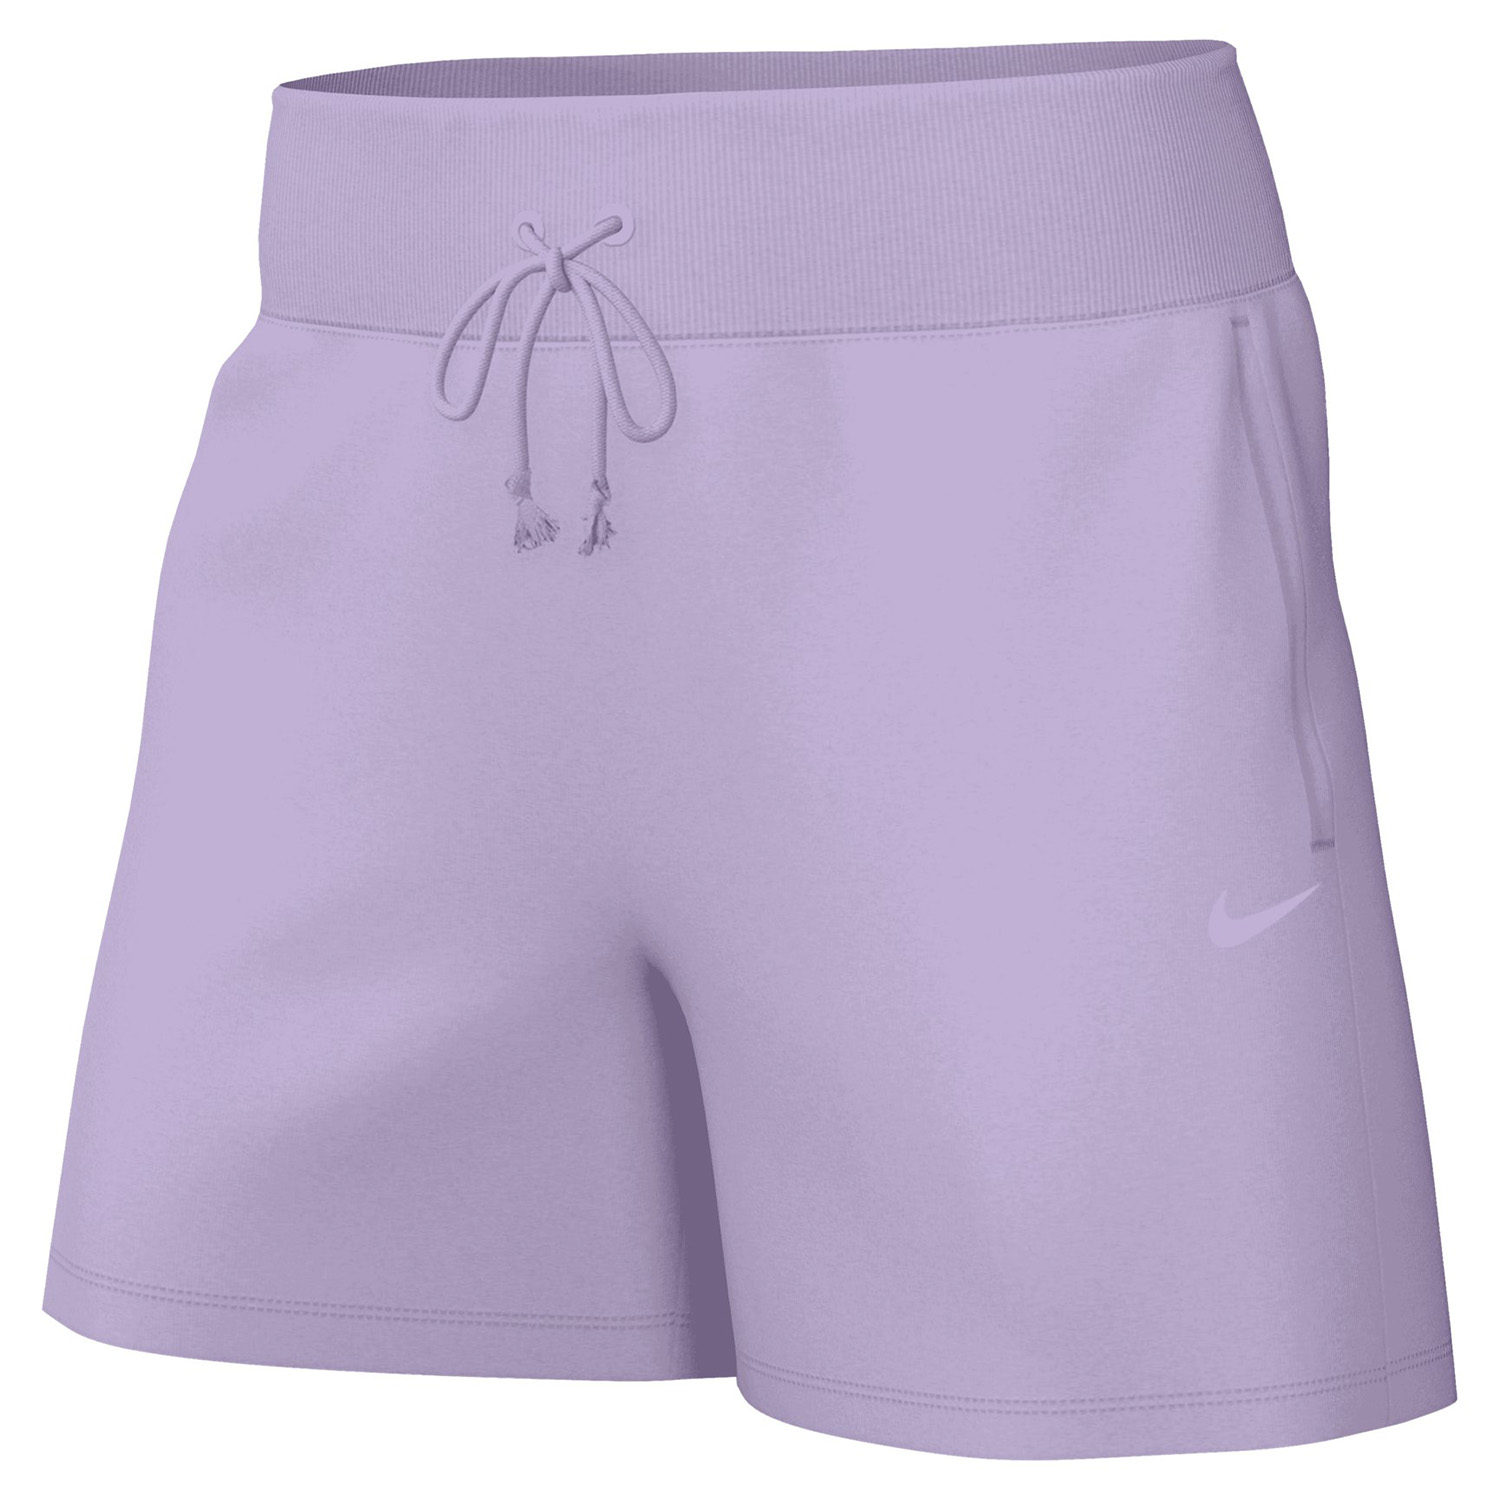 Nike Phoenix Damen Short Violet Mist Sail 24303